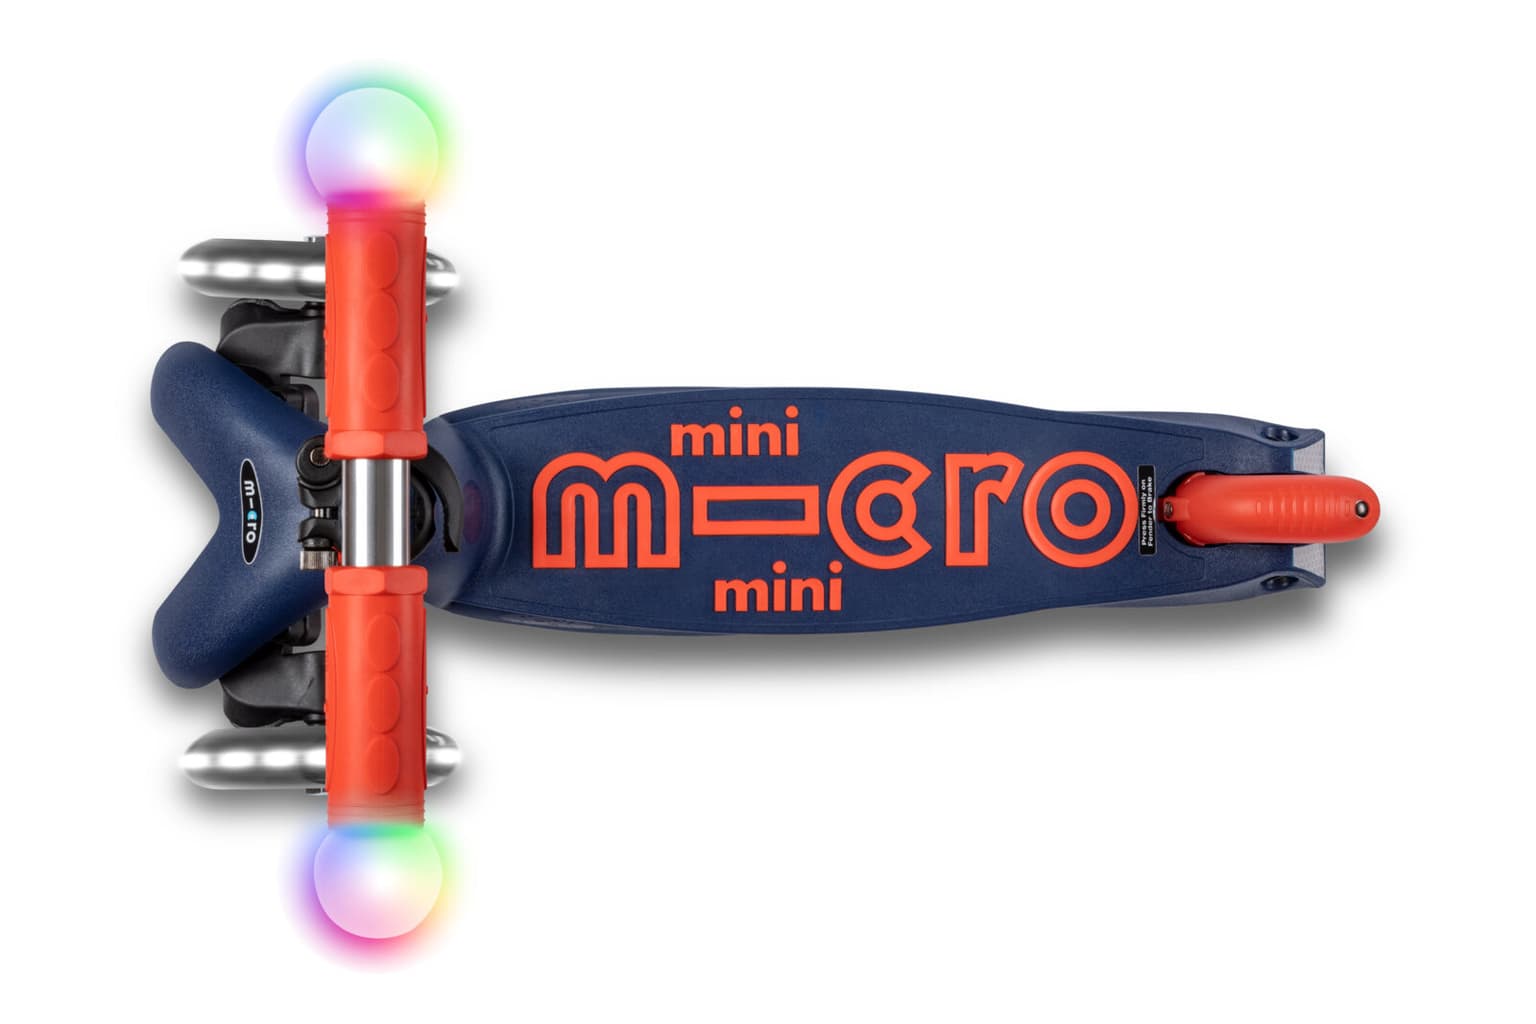 Micro Micro Mini Deluxe Magic LED Monopattini 3